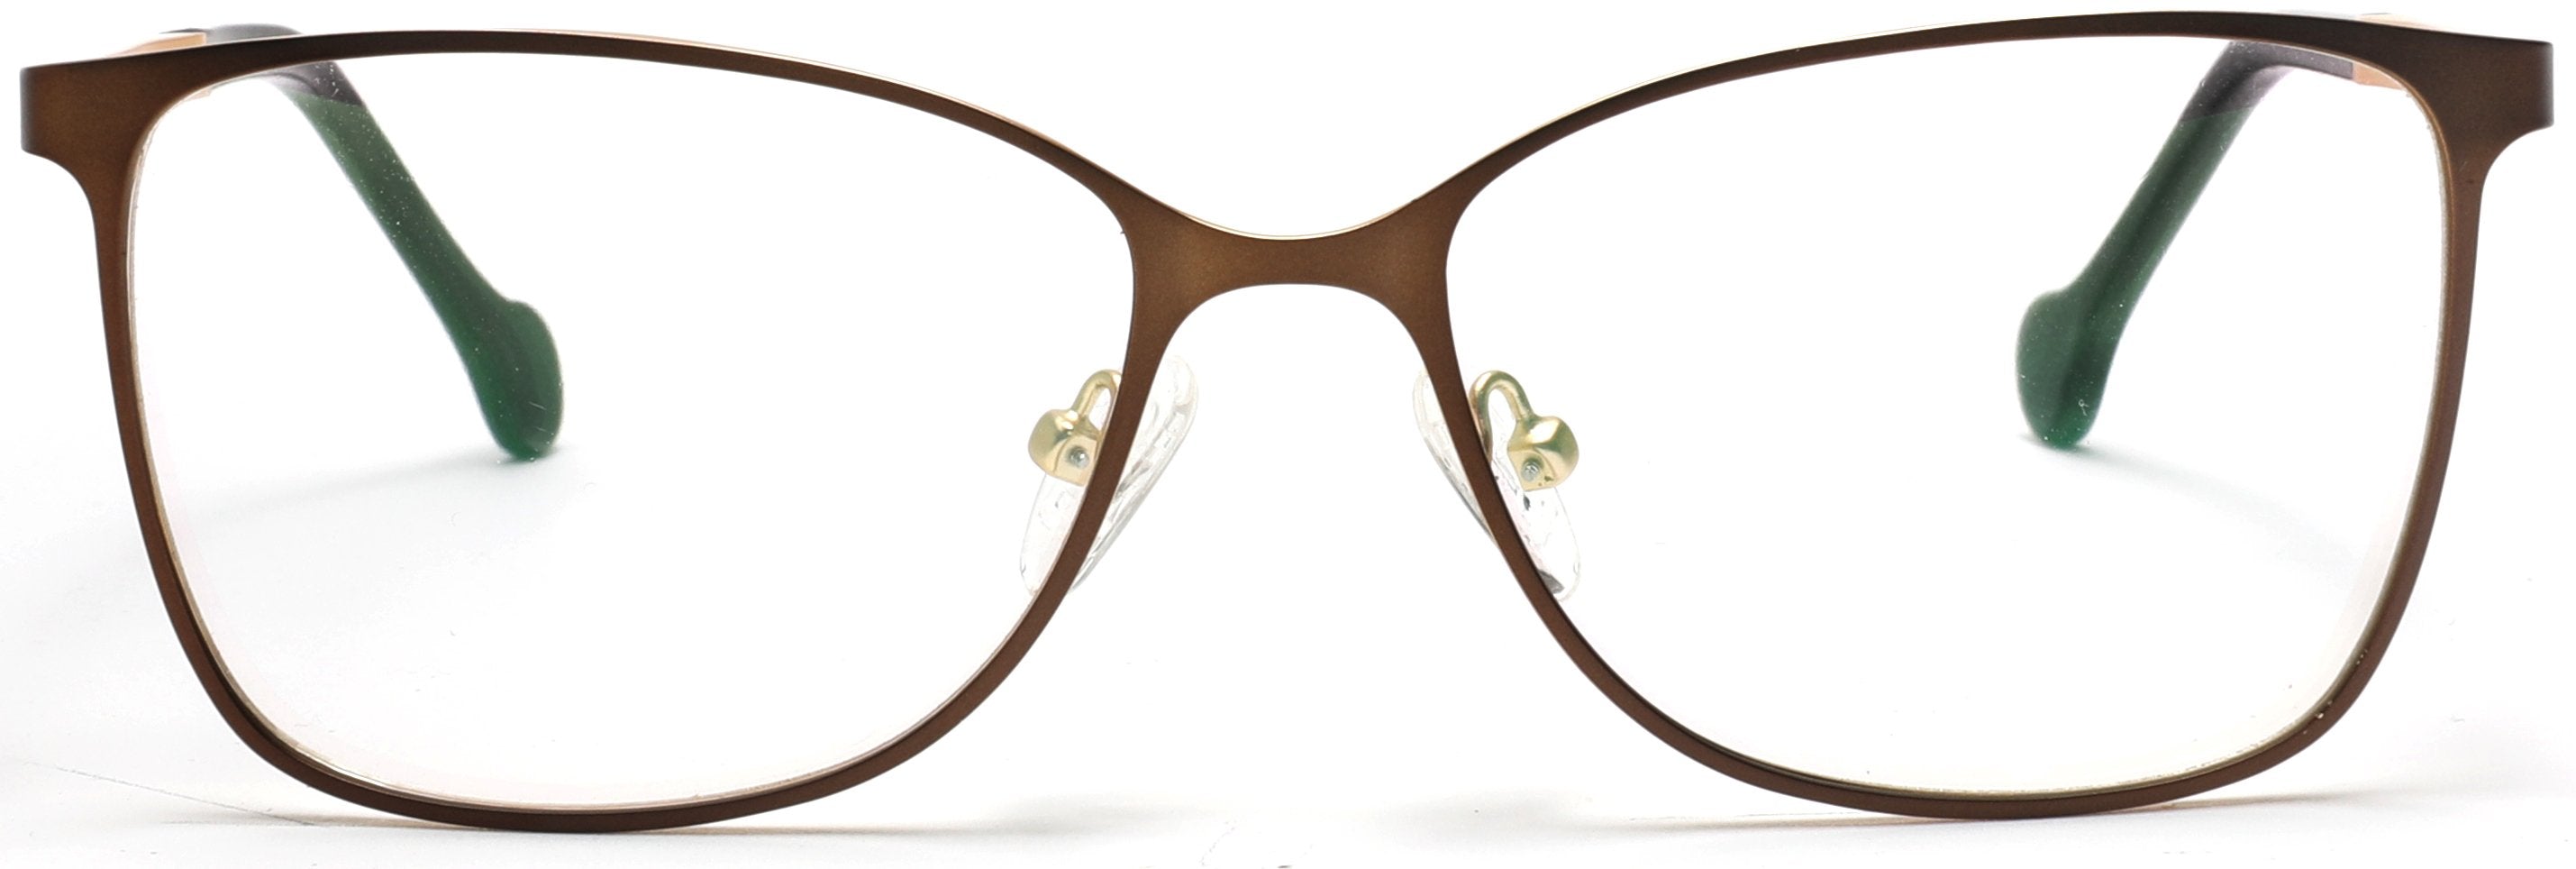 Tango Optics Metal Optical Eyeglasses Frame Luxe Reading Stainless Steel Gold Accent Dorothy Johnson Brown For Prescription Lens-Samba Shades